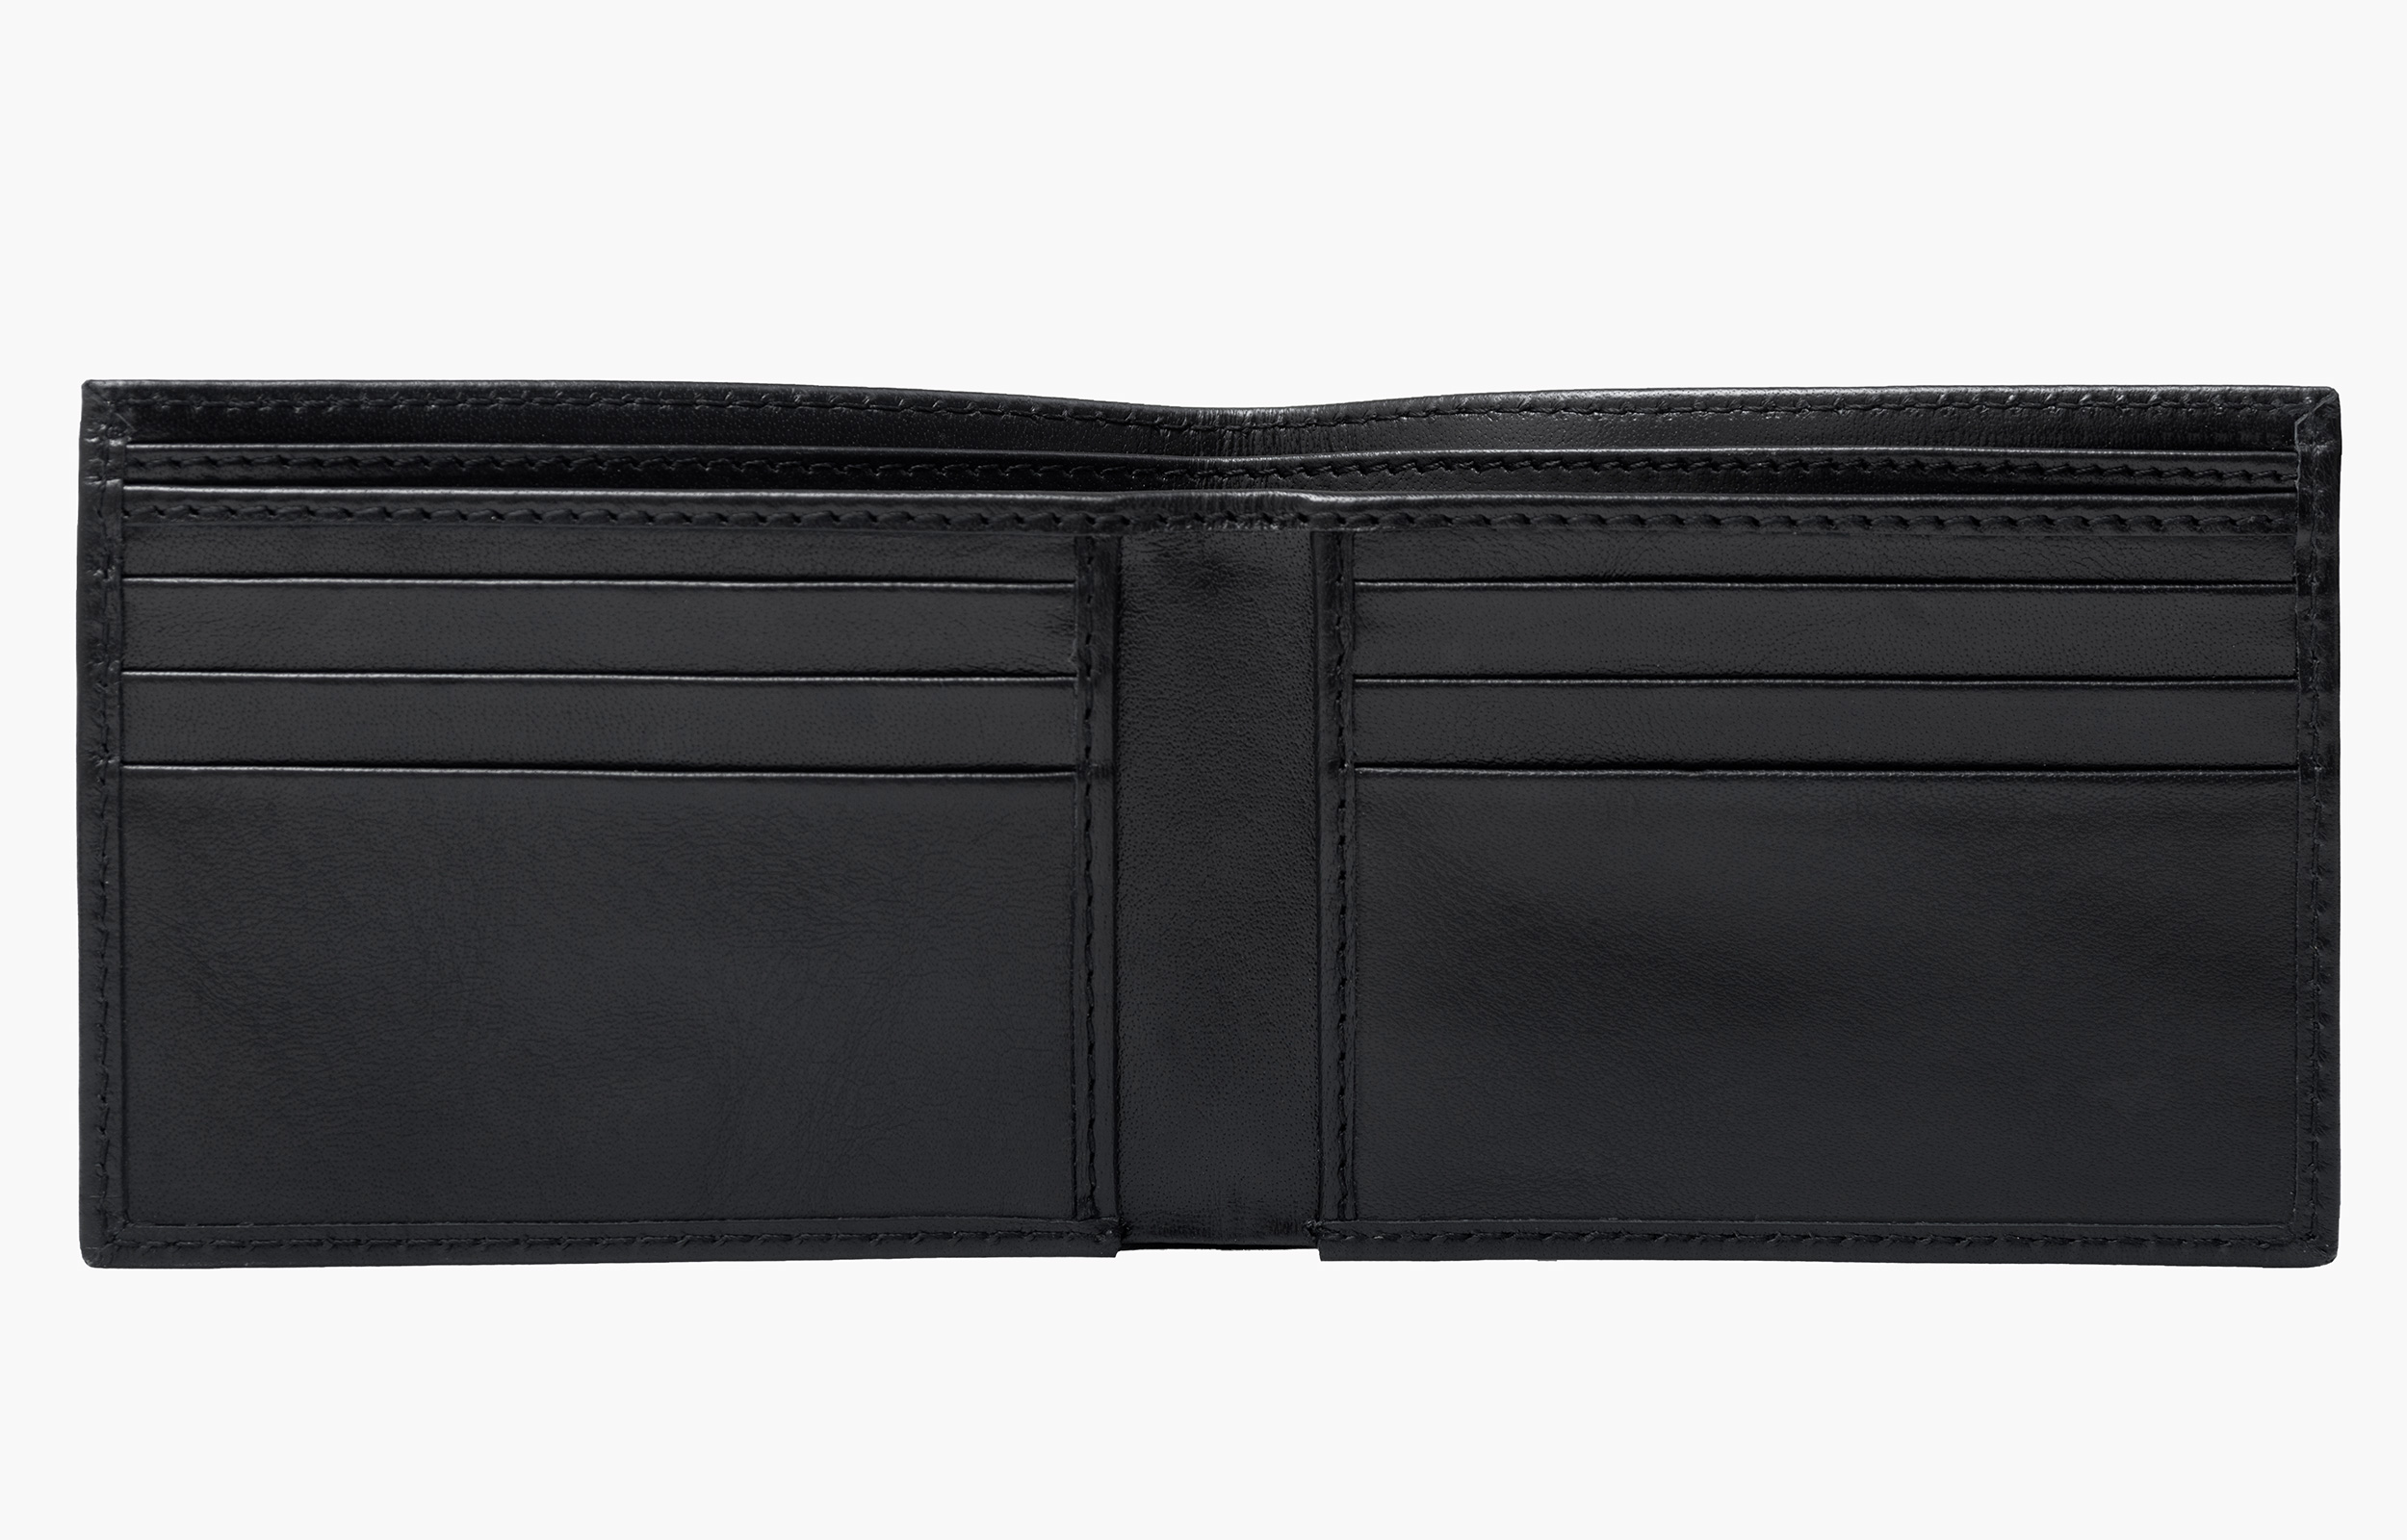 Pluto Midnight Black Leather wallet UK 2